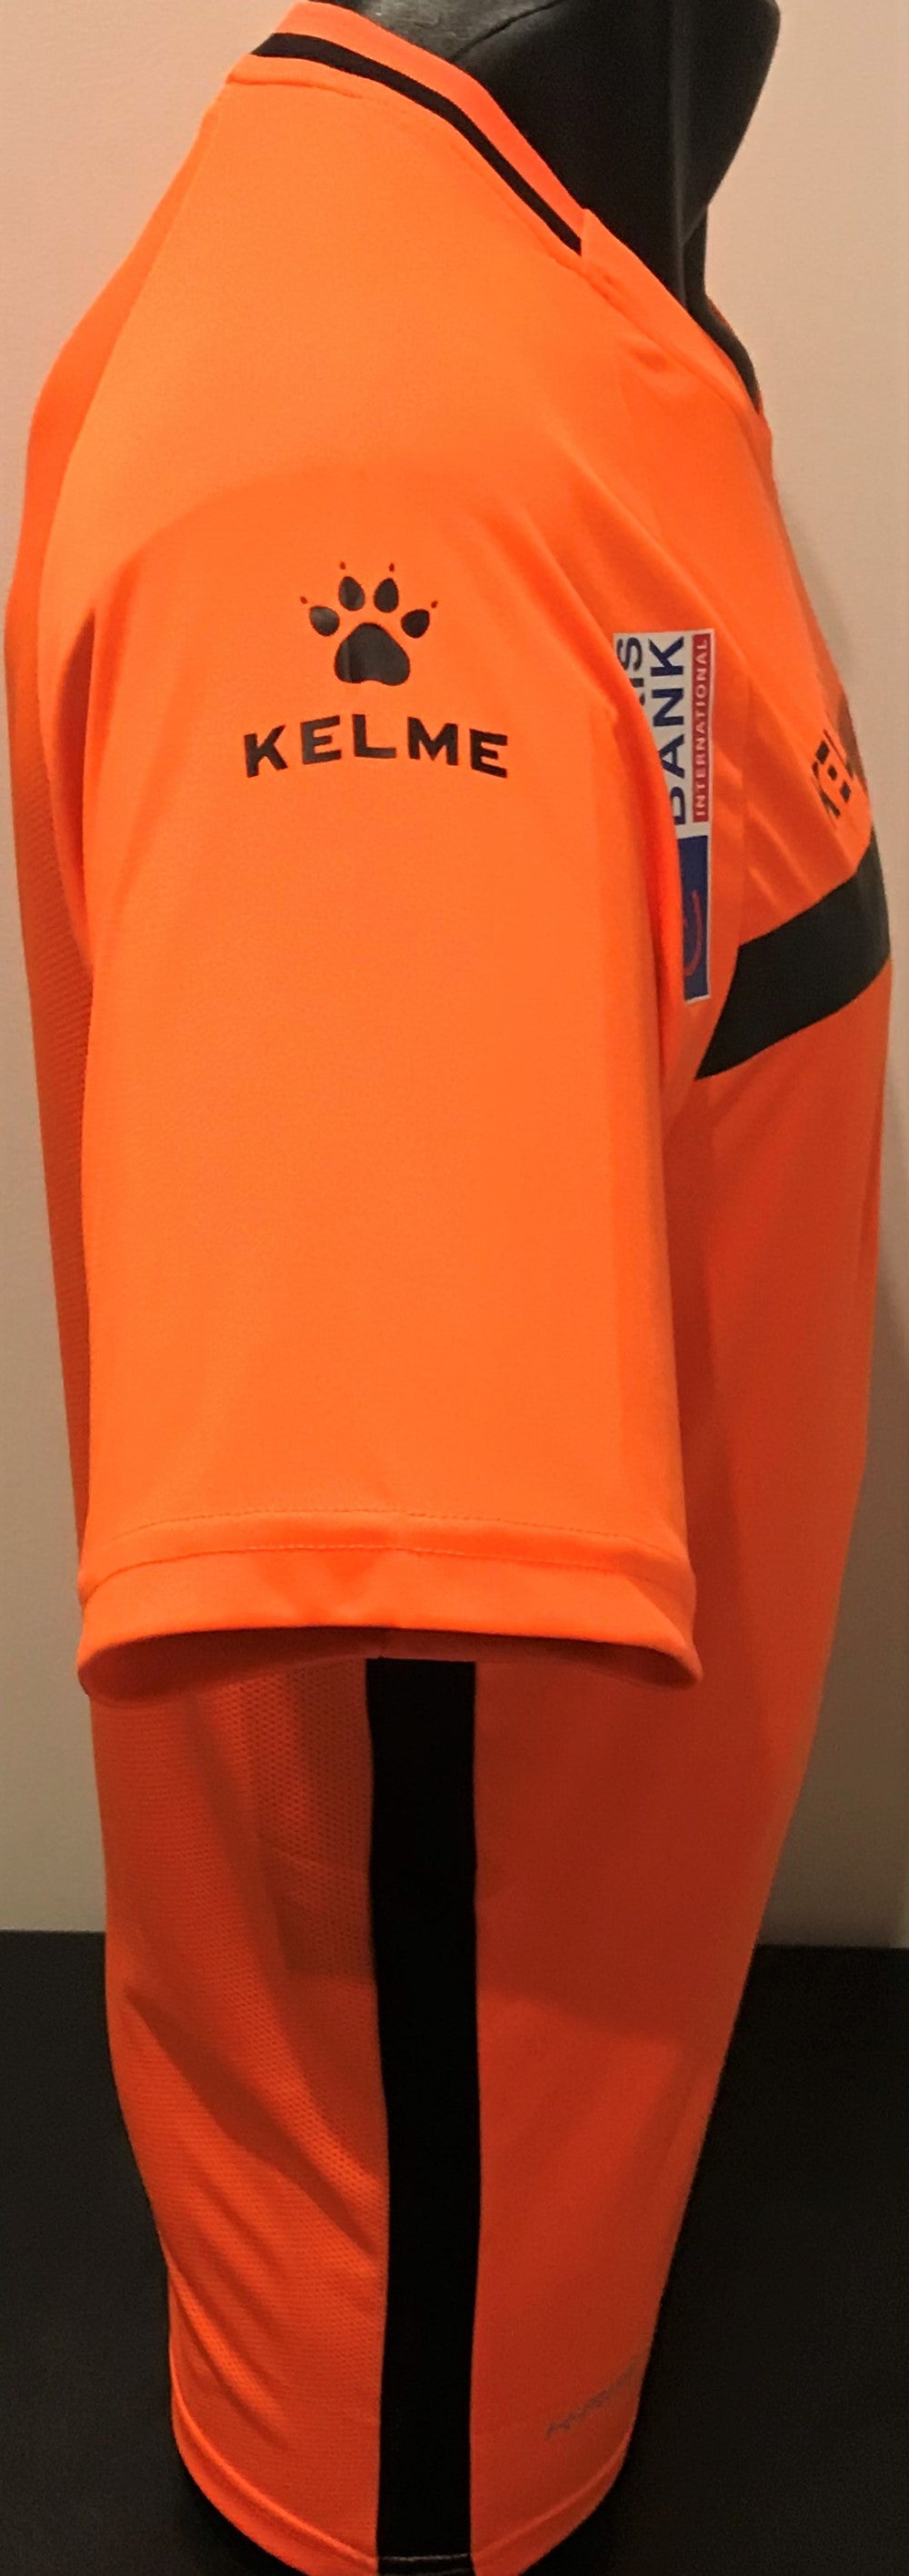 AS Dragons FC de l'Ouémé 2020-21 Home Jersey/Shirt